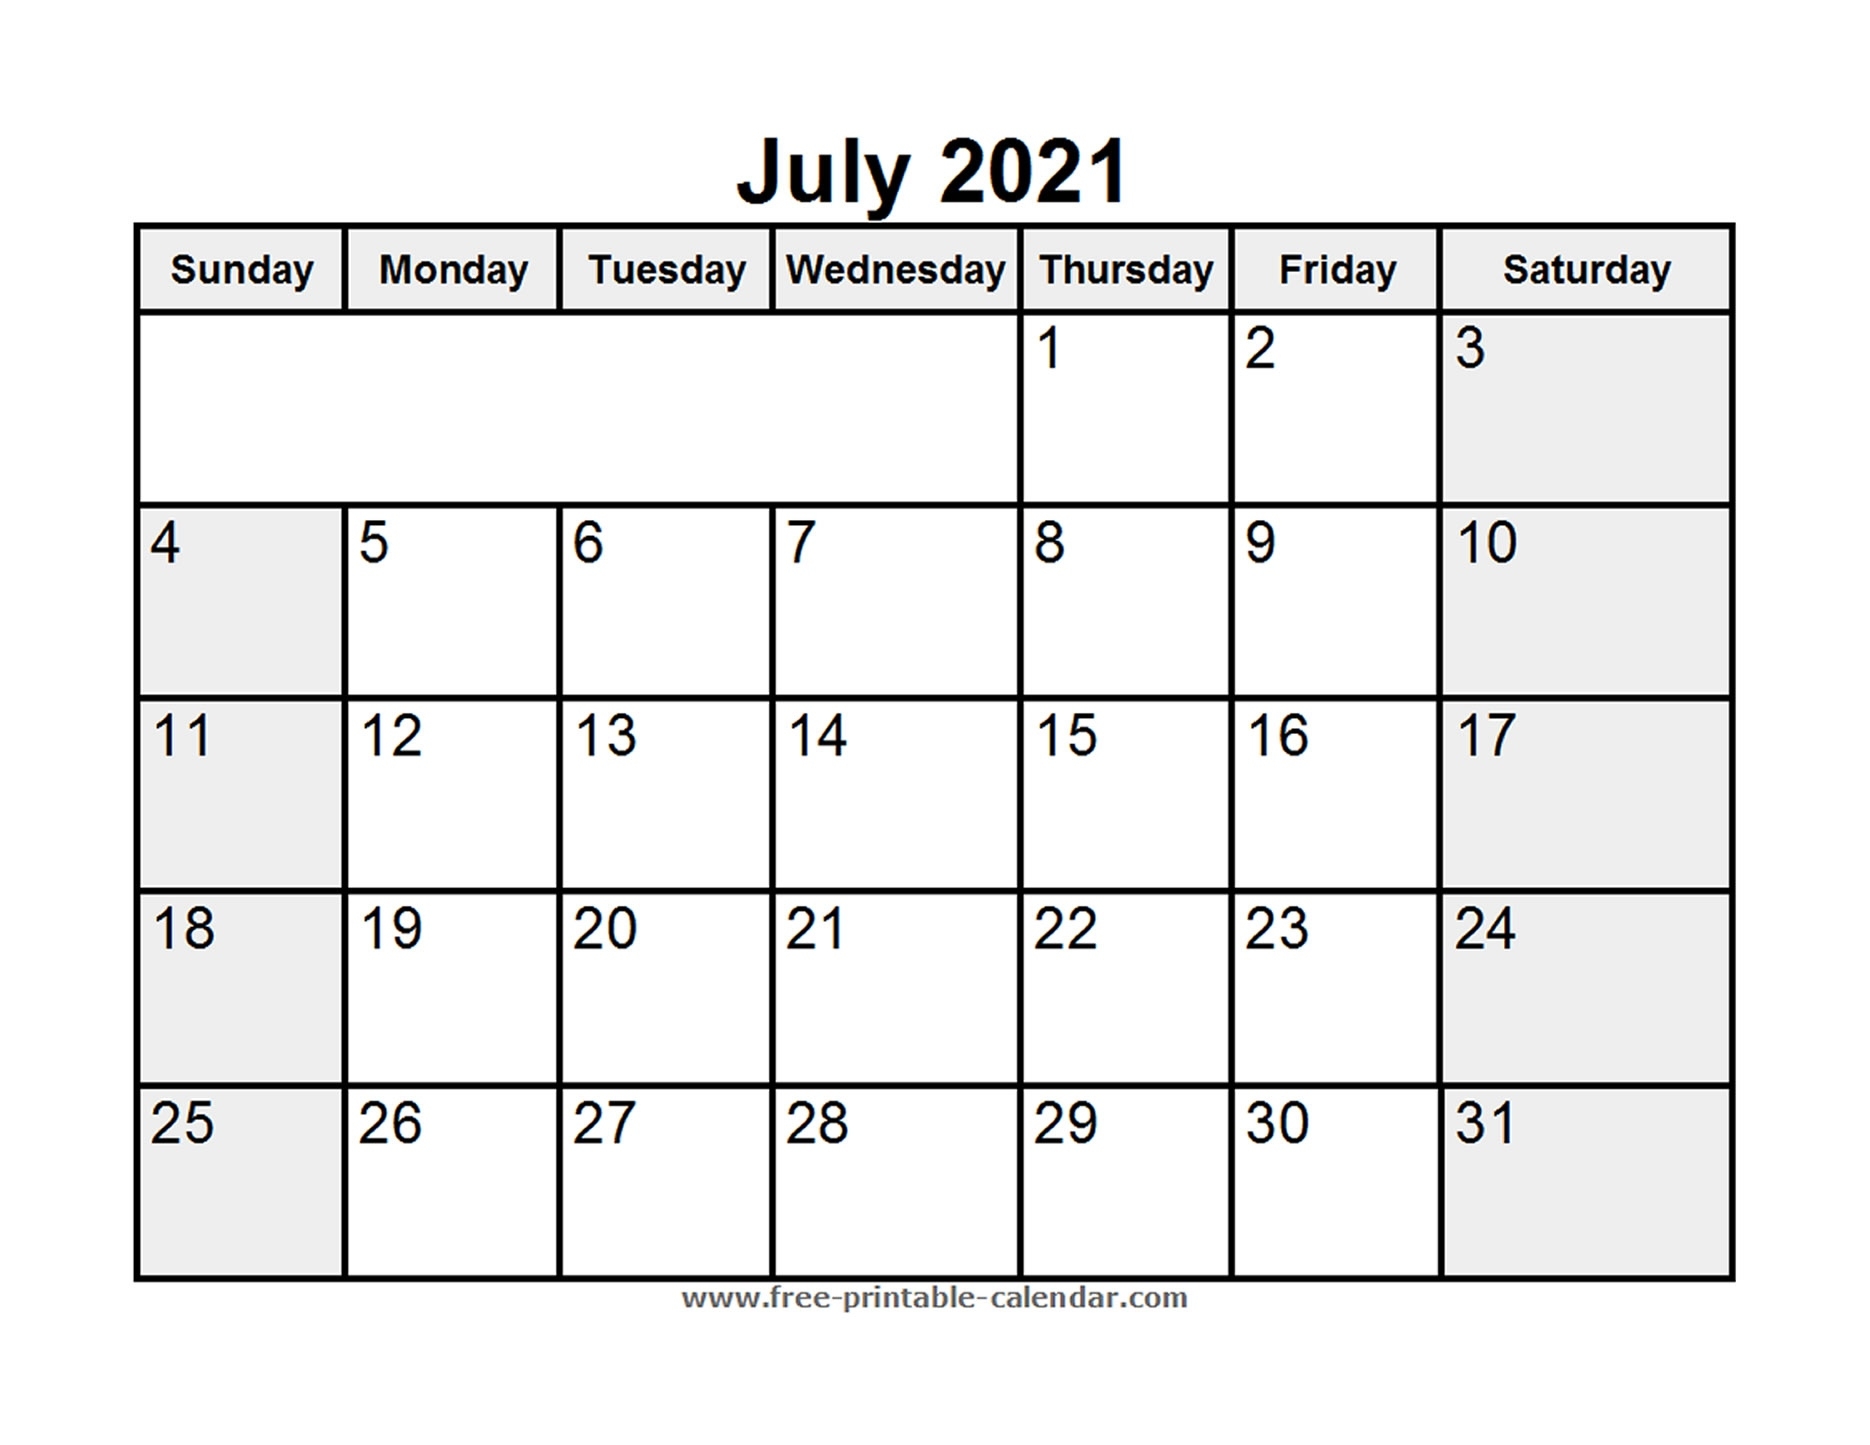 Printable July 2021 Calendar - Free-Printable-Calendar July 2021 Calendar Pdf Download